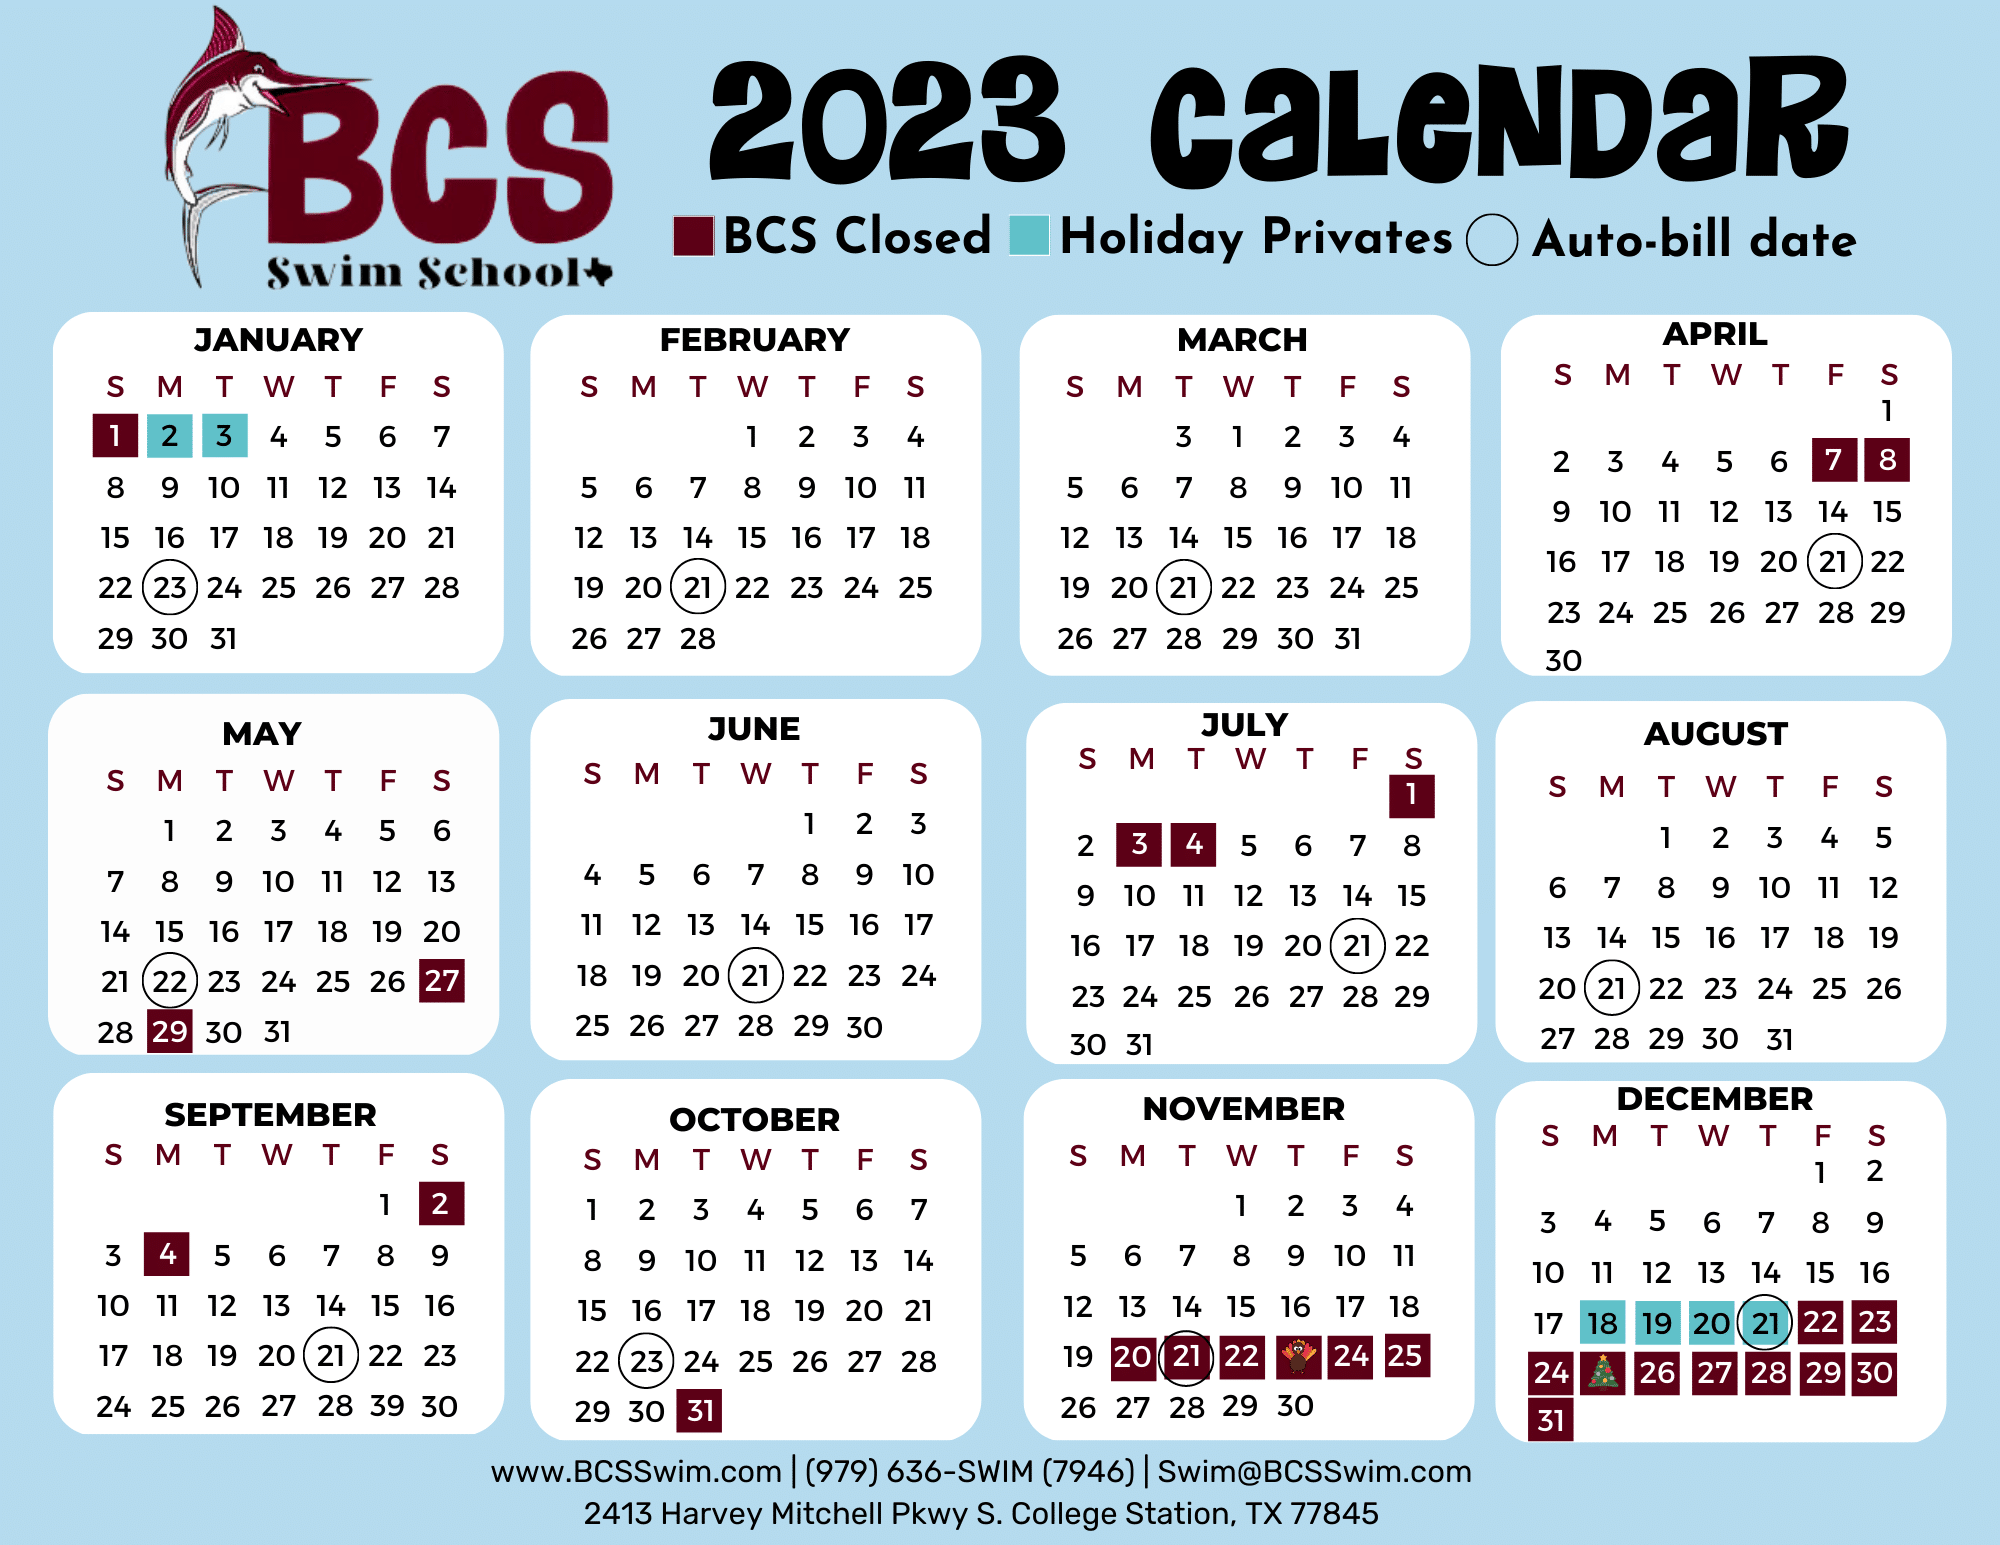 BCS Swim School Calendar 2023